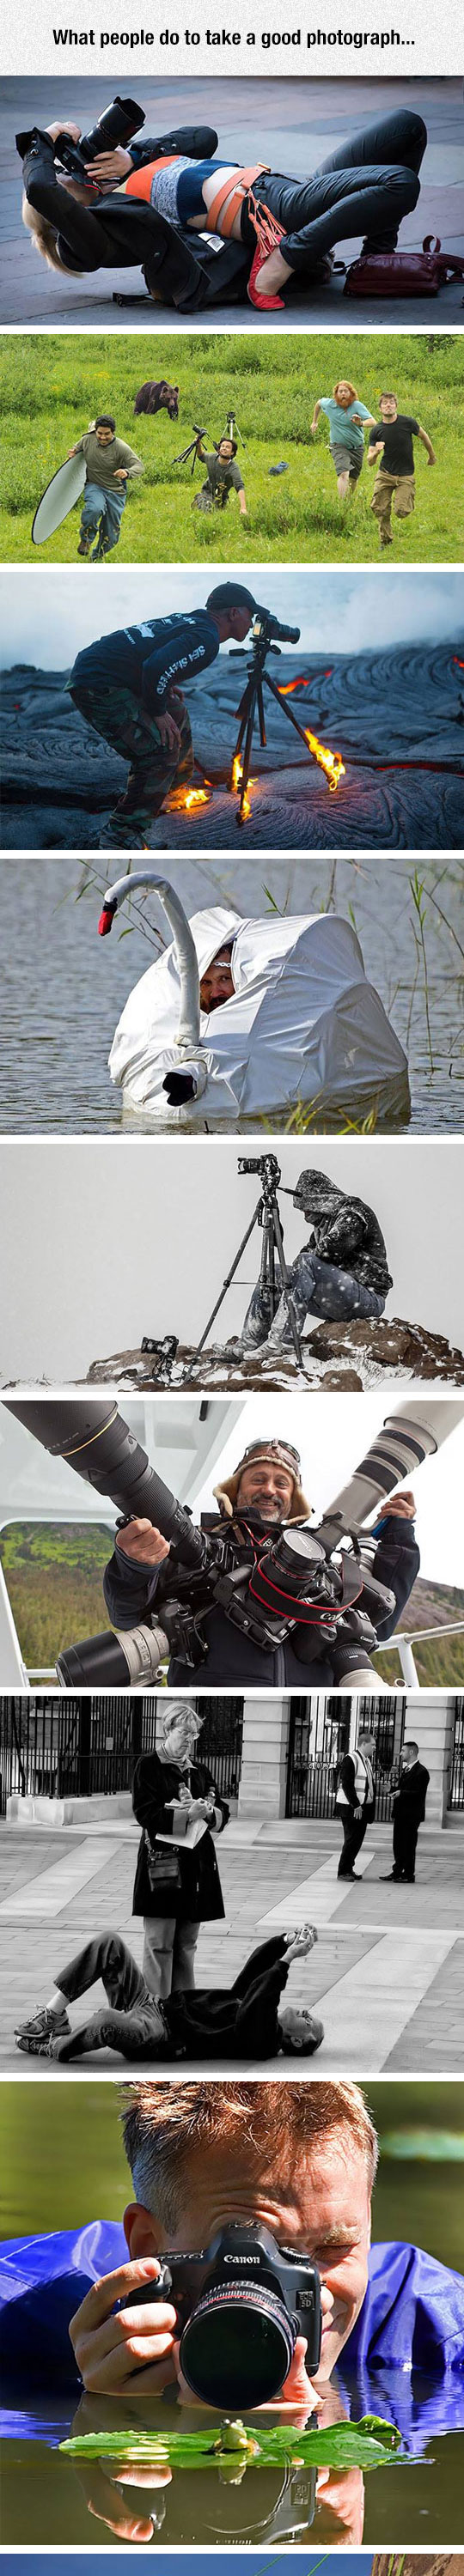 funny-cool-photographer-pose-fox-lake-swan